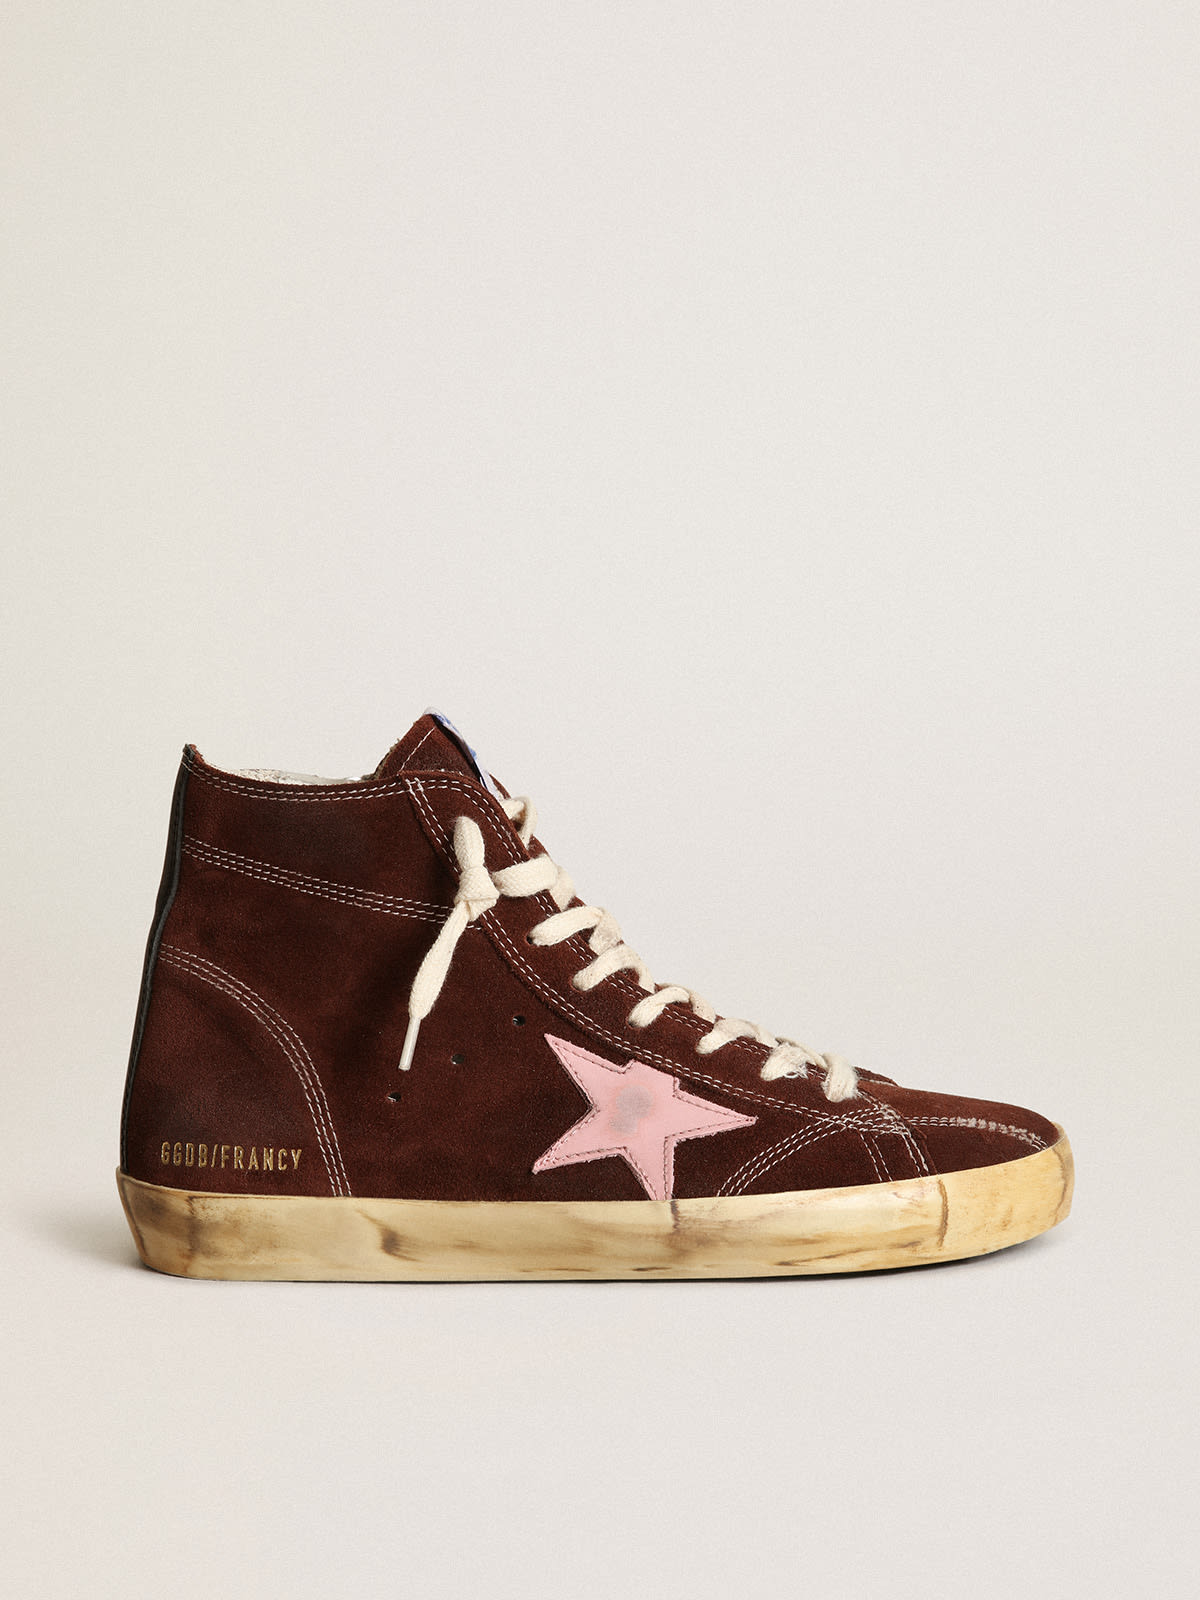 Golden Goose - Sneaker Francy in suede marrone con stella in pelle rosa e talloncino in nappa nera in 